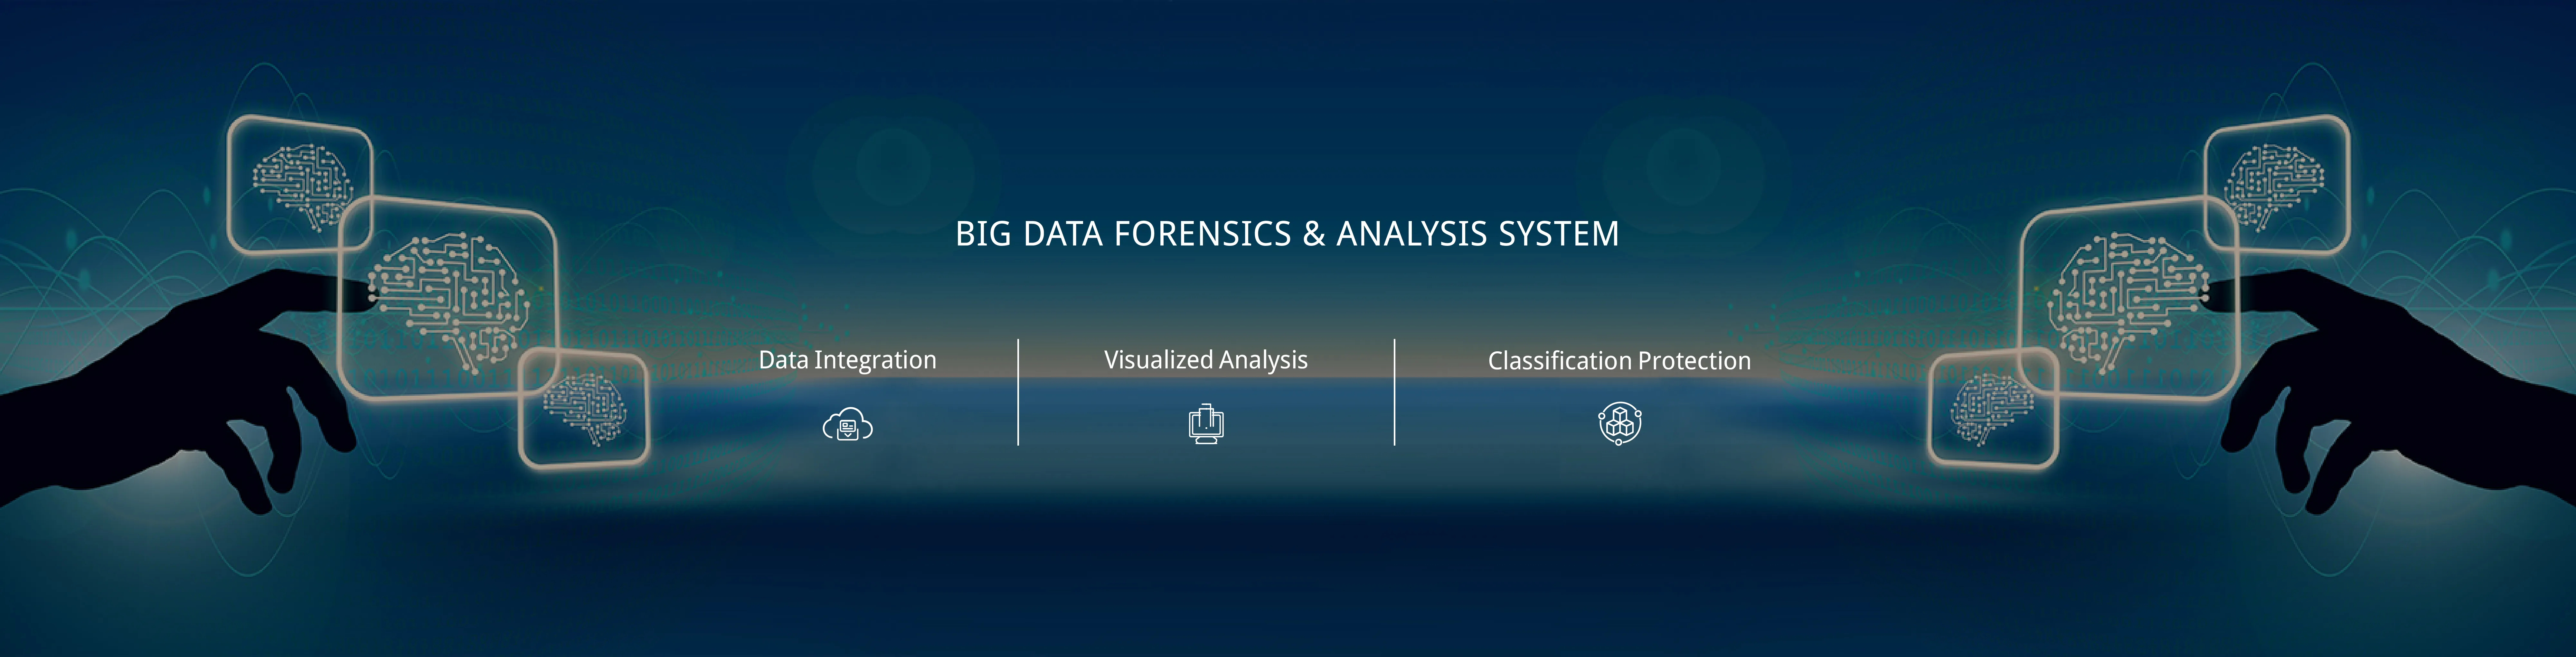 Big Data Forensics System